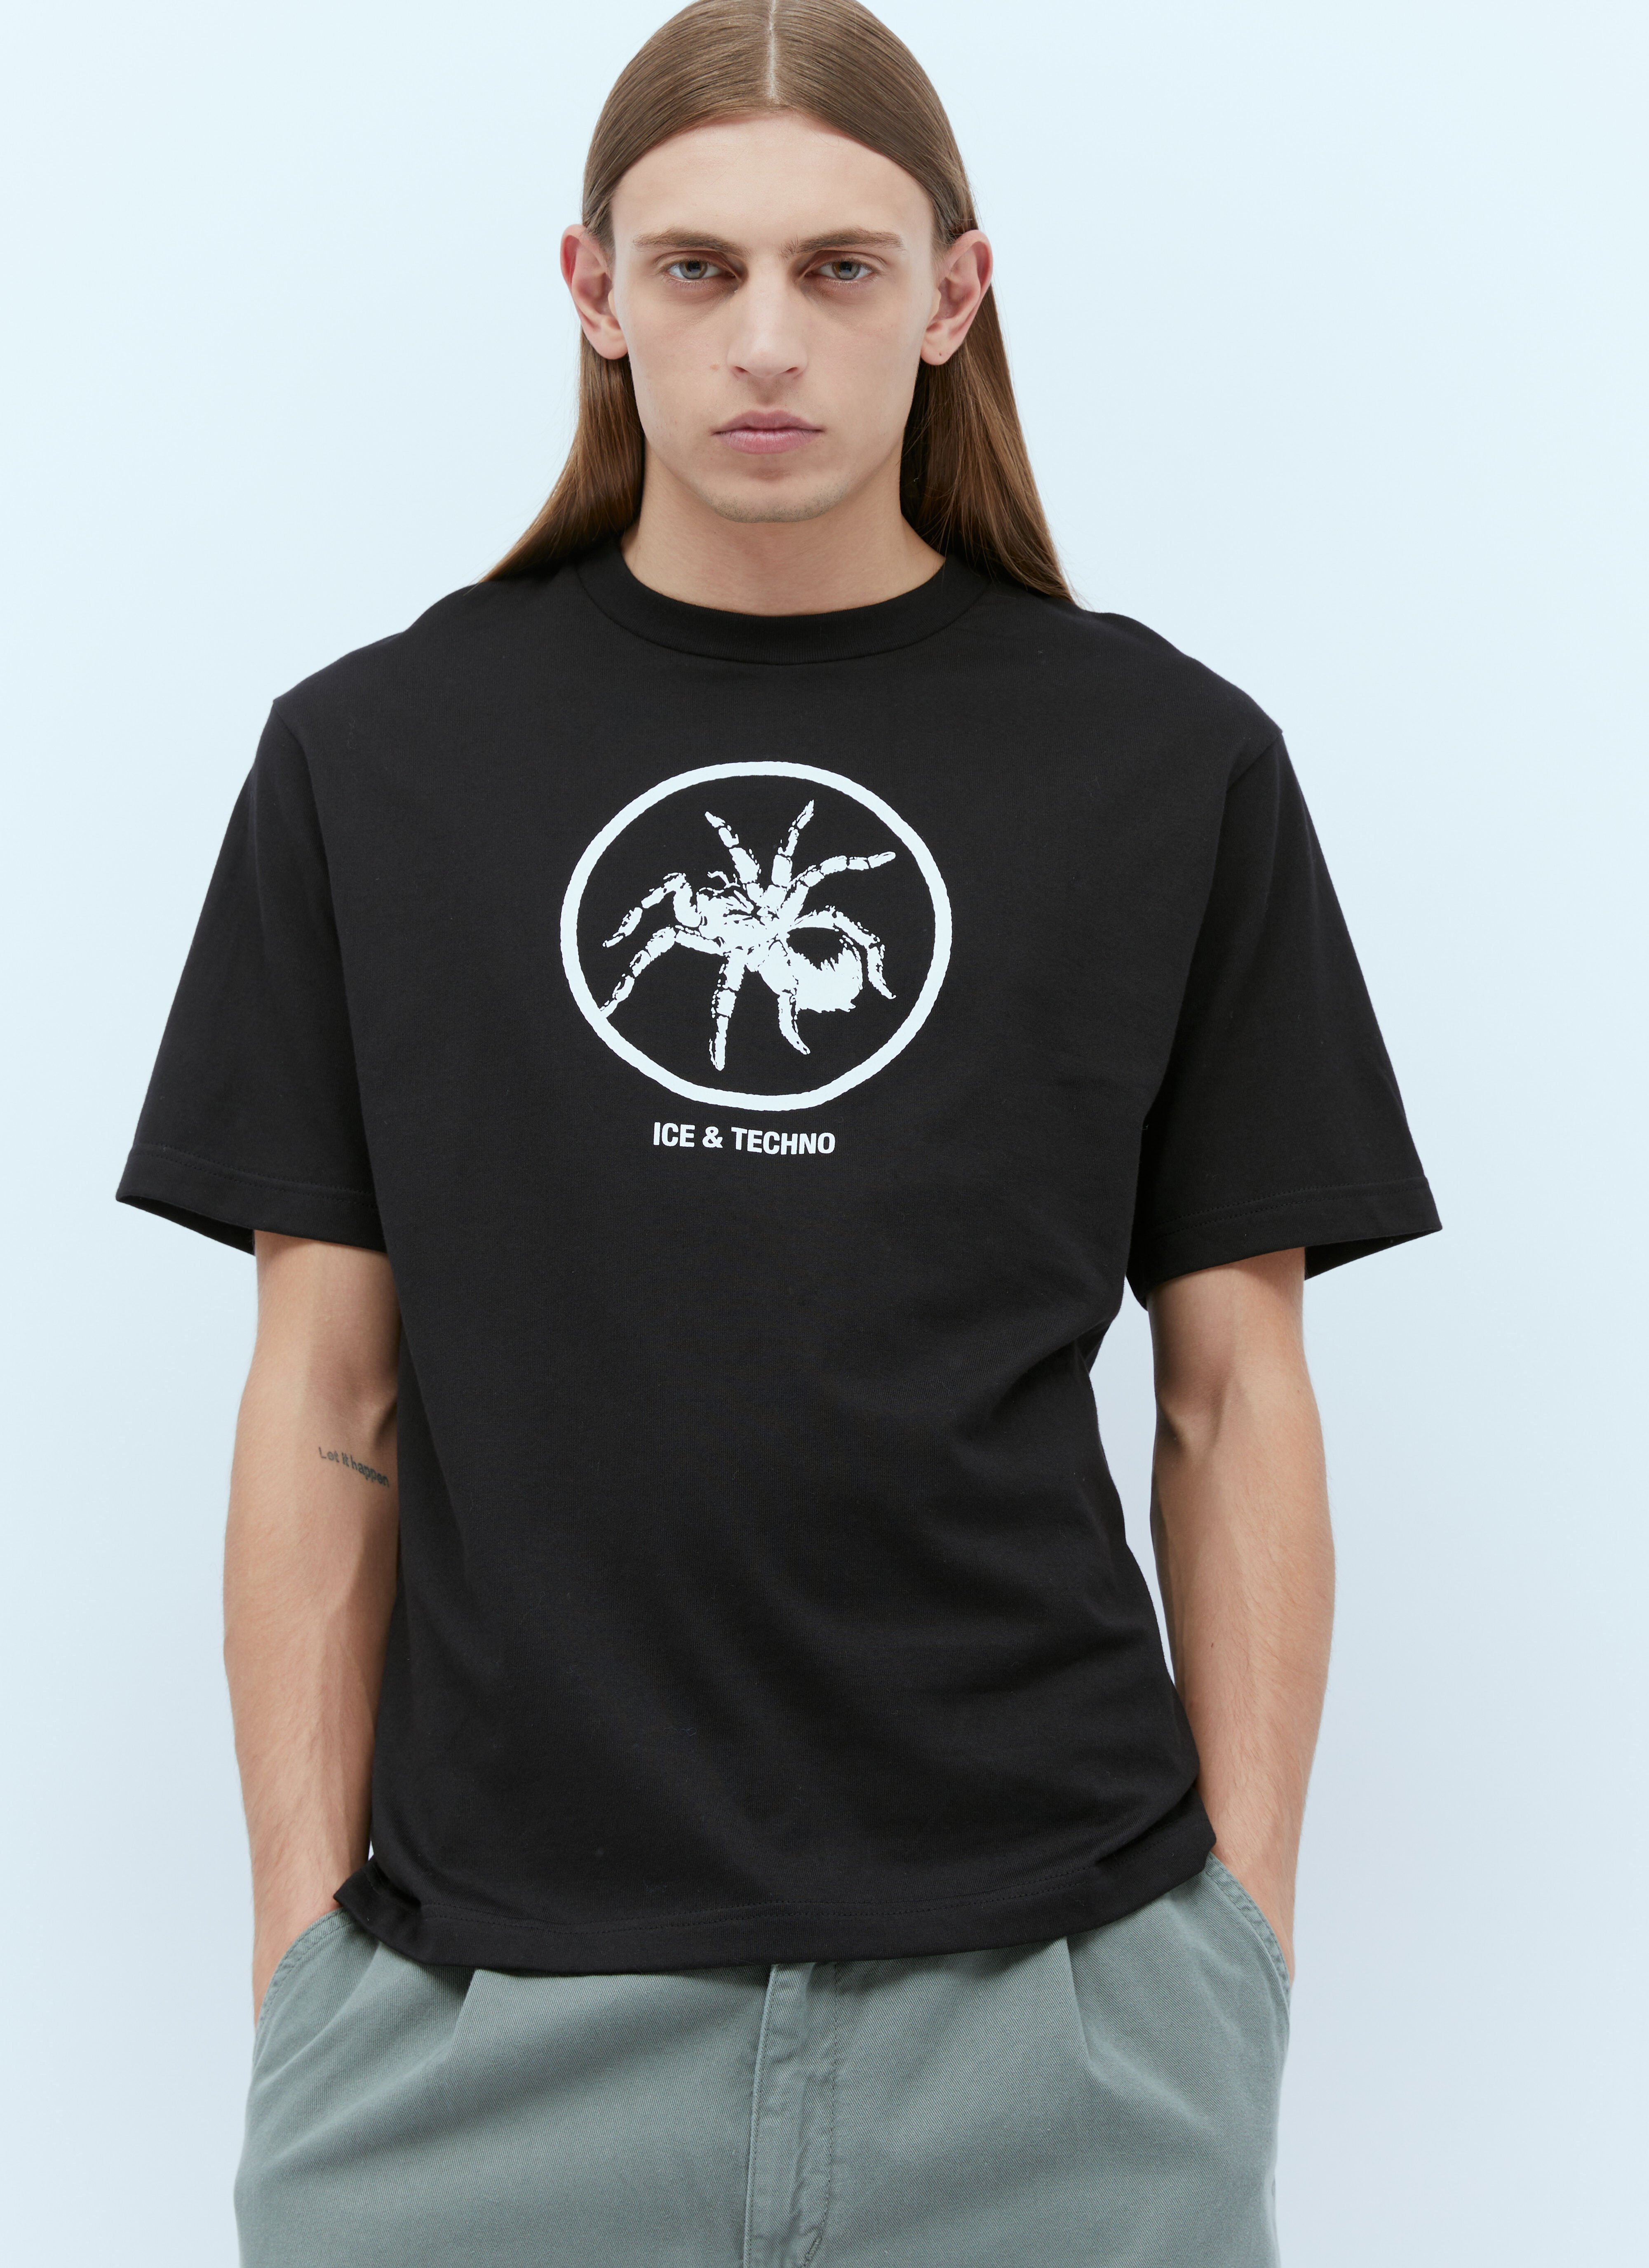 HYSTERIC GLAMOUR x CIRCLE HERITAGE Spider T-Shirt Black hgc0155002